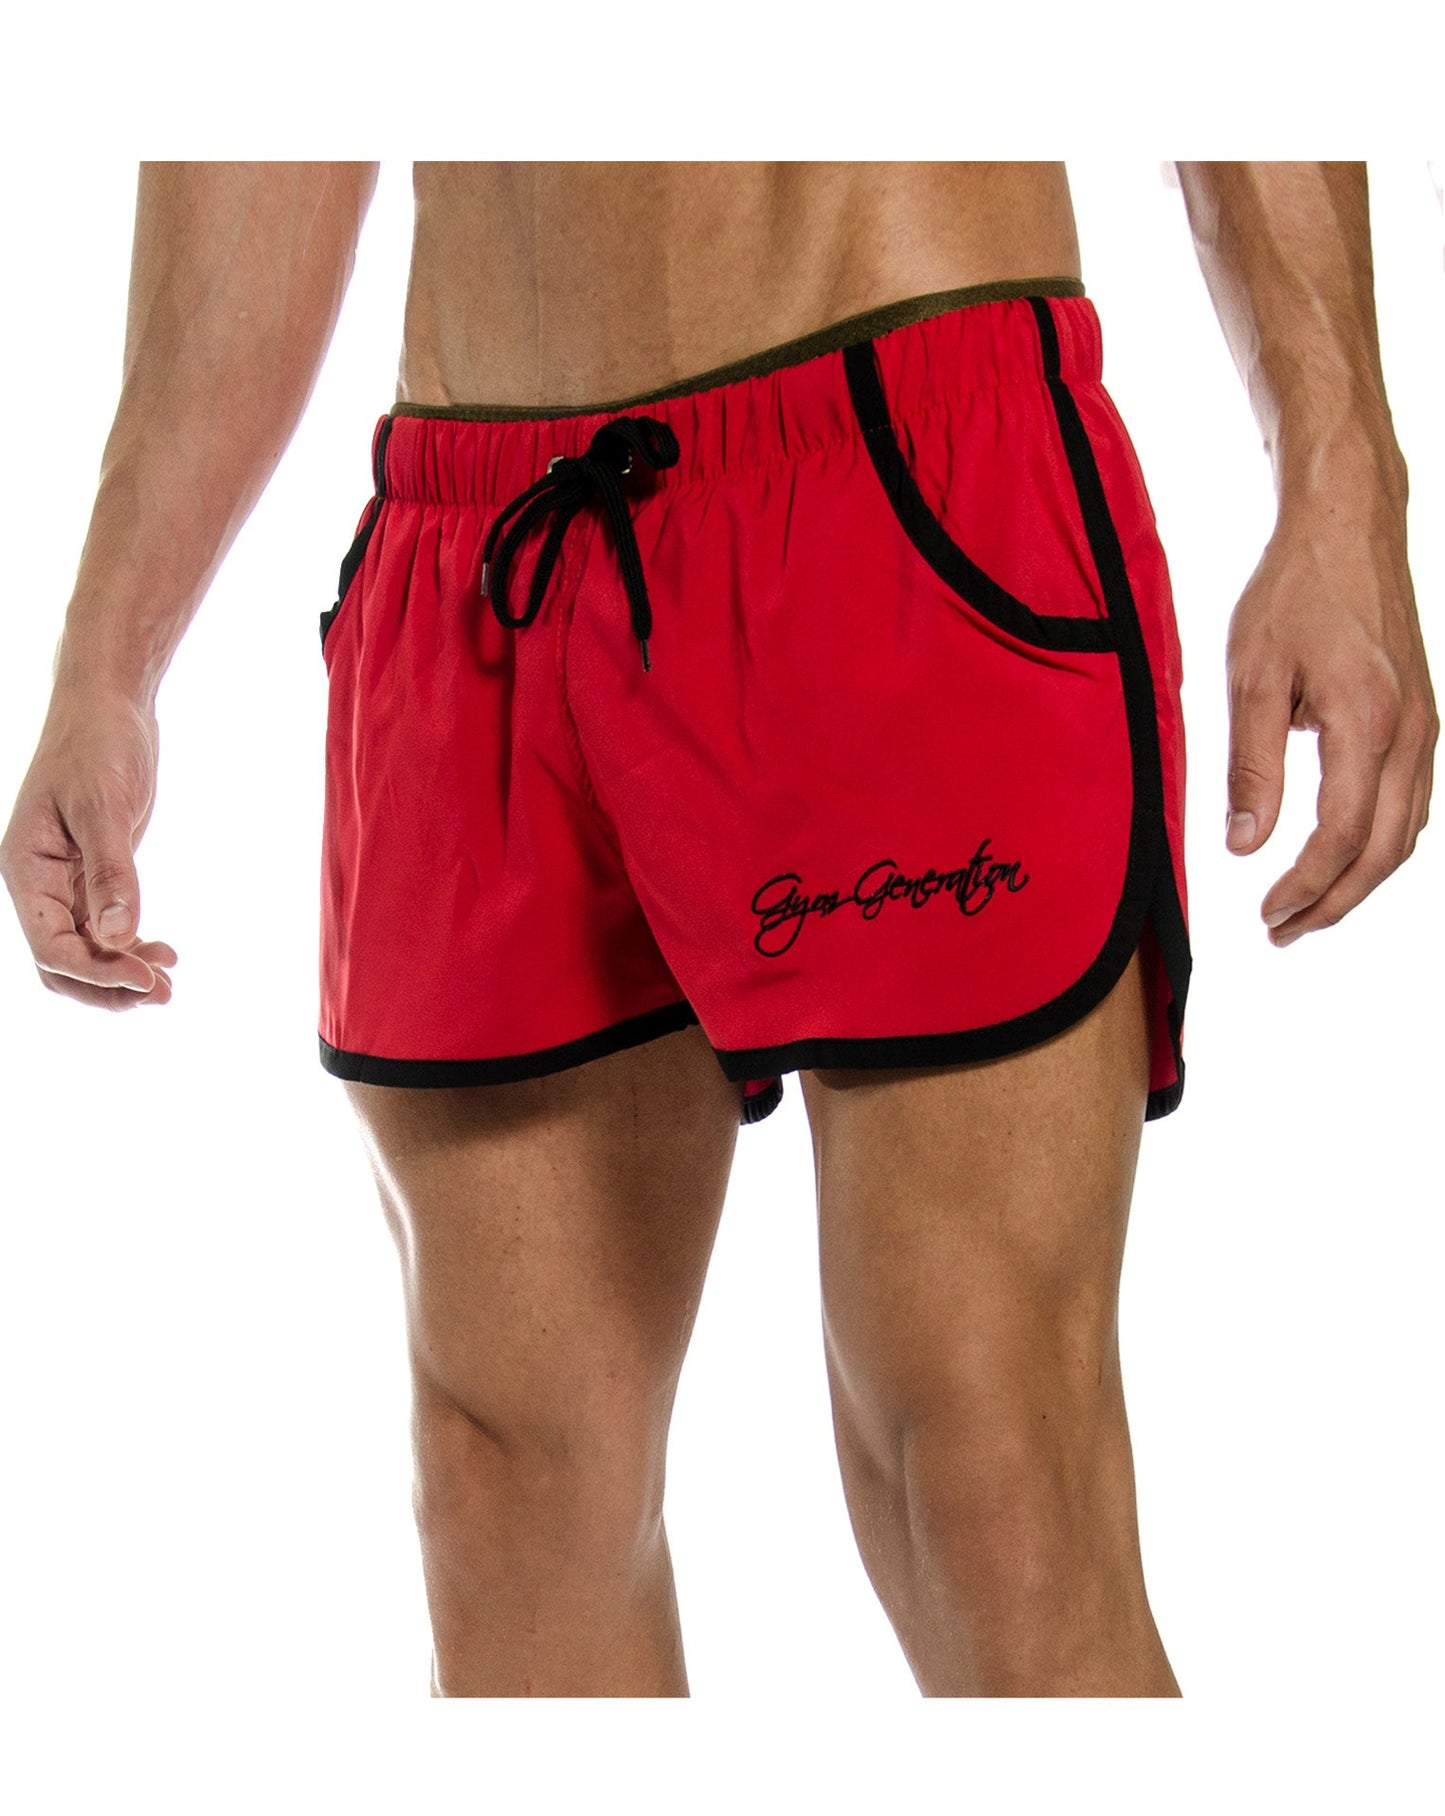 Aesthetic Gym Shorts - Rot - Gym Generation®--www.gymgeneration.ch